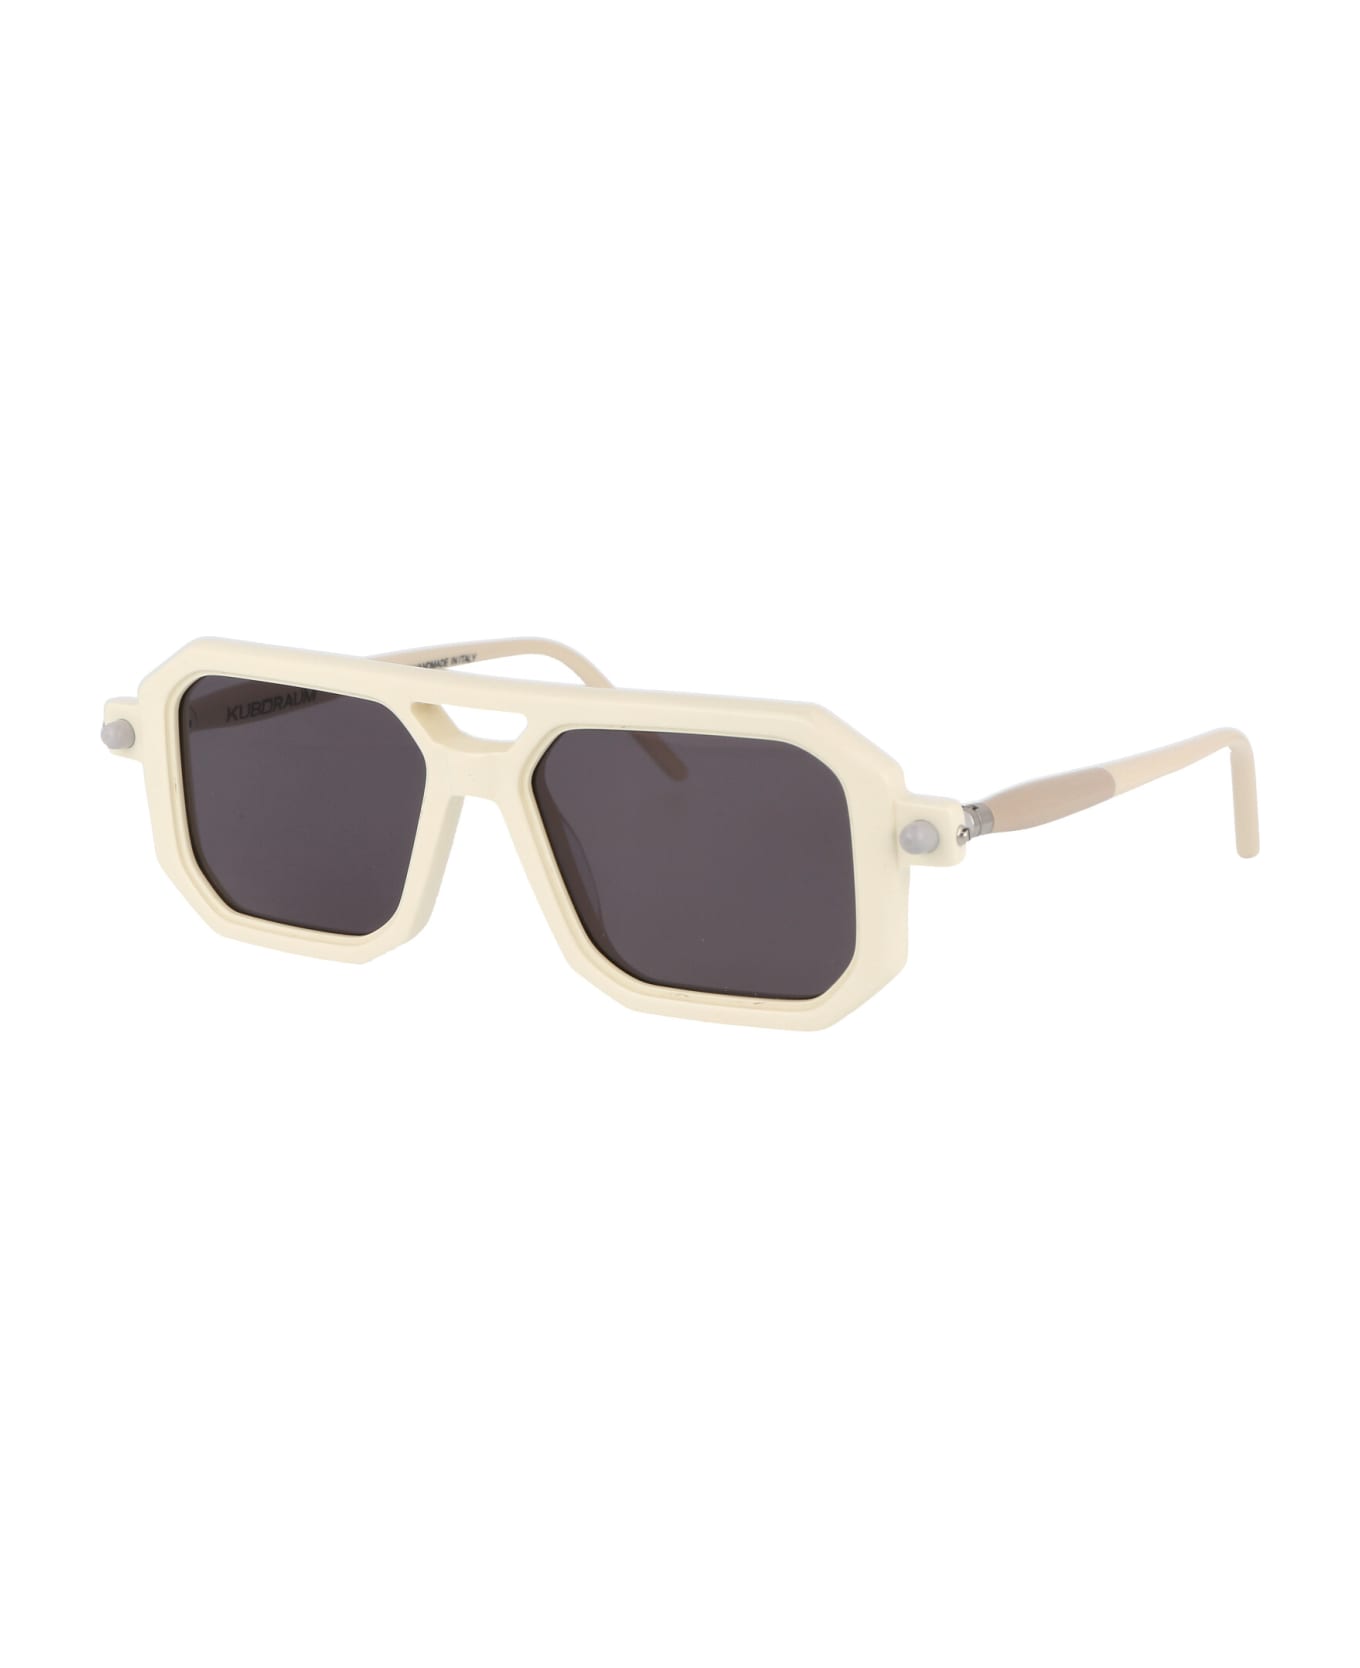 Kuboraum Maske P8 Sunglasses - WH 2grey